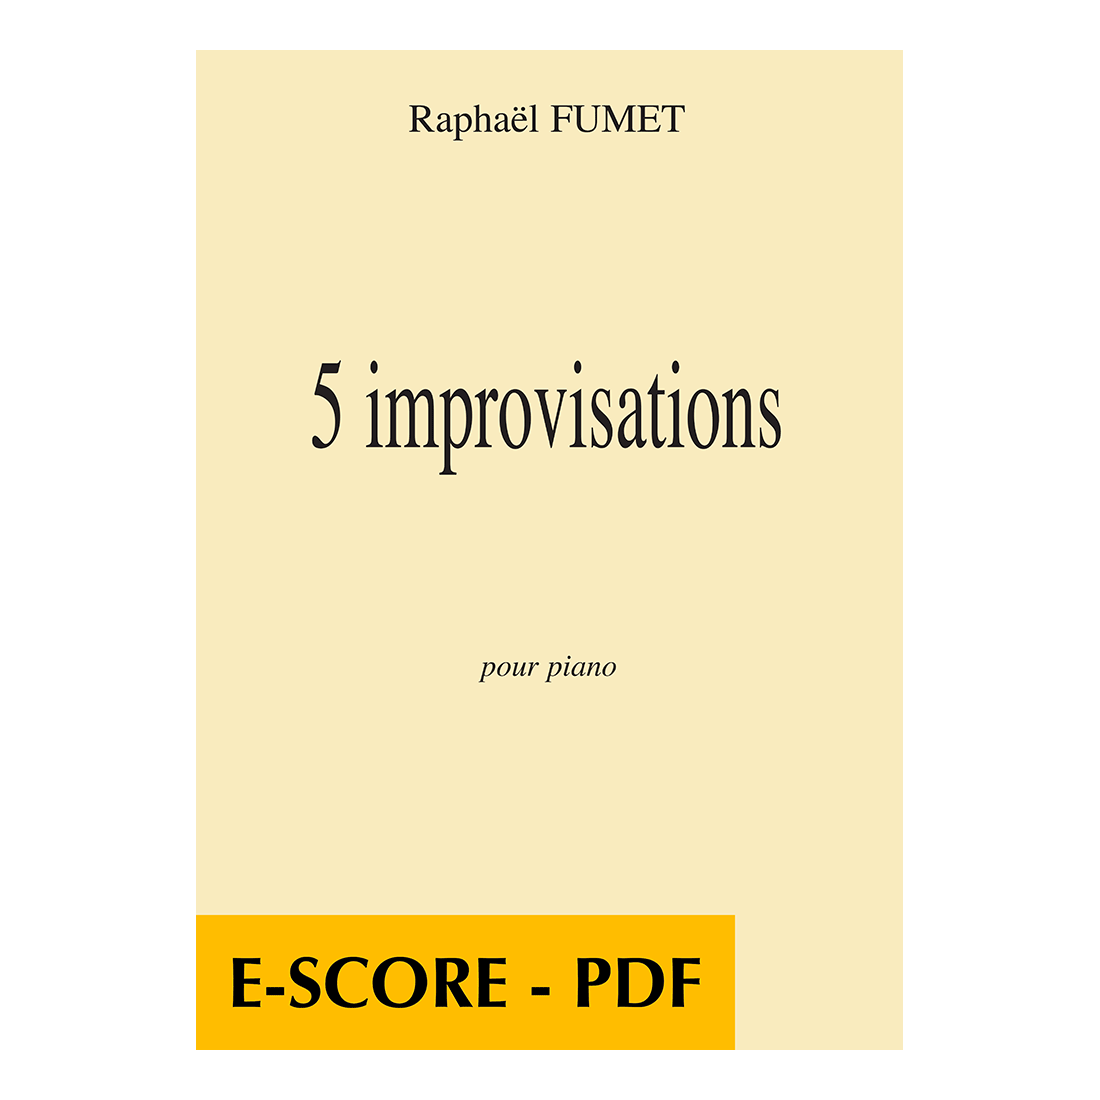 5 improvisations für klavier - E-score PDF